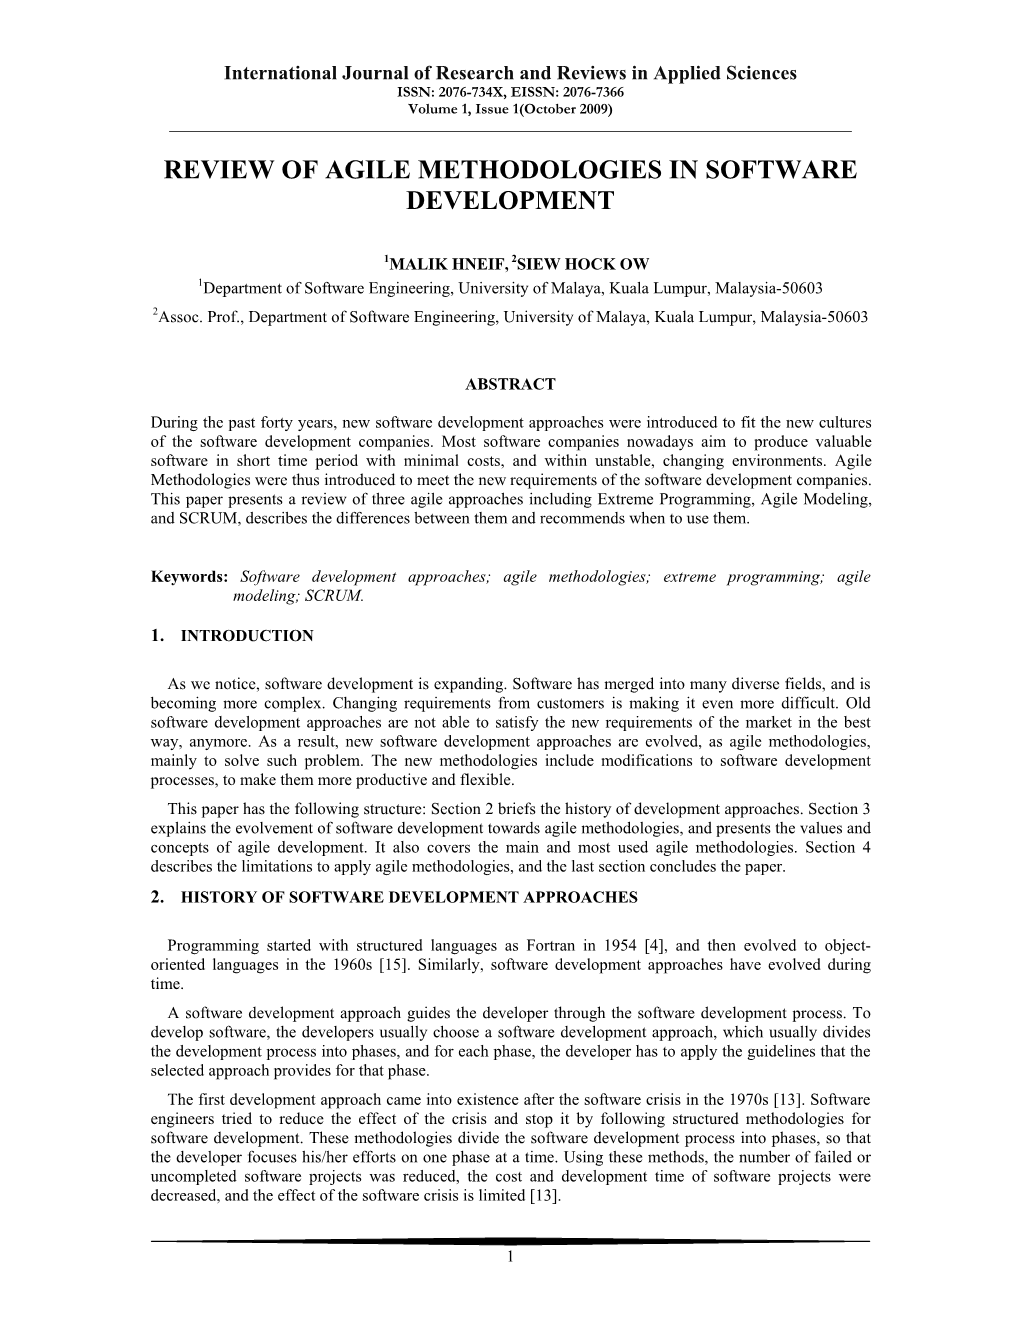 Review of Agile Methodologies in Software Development